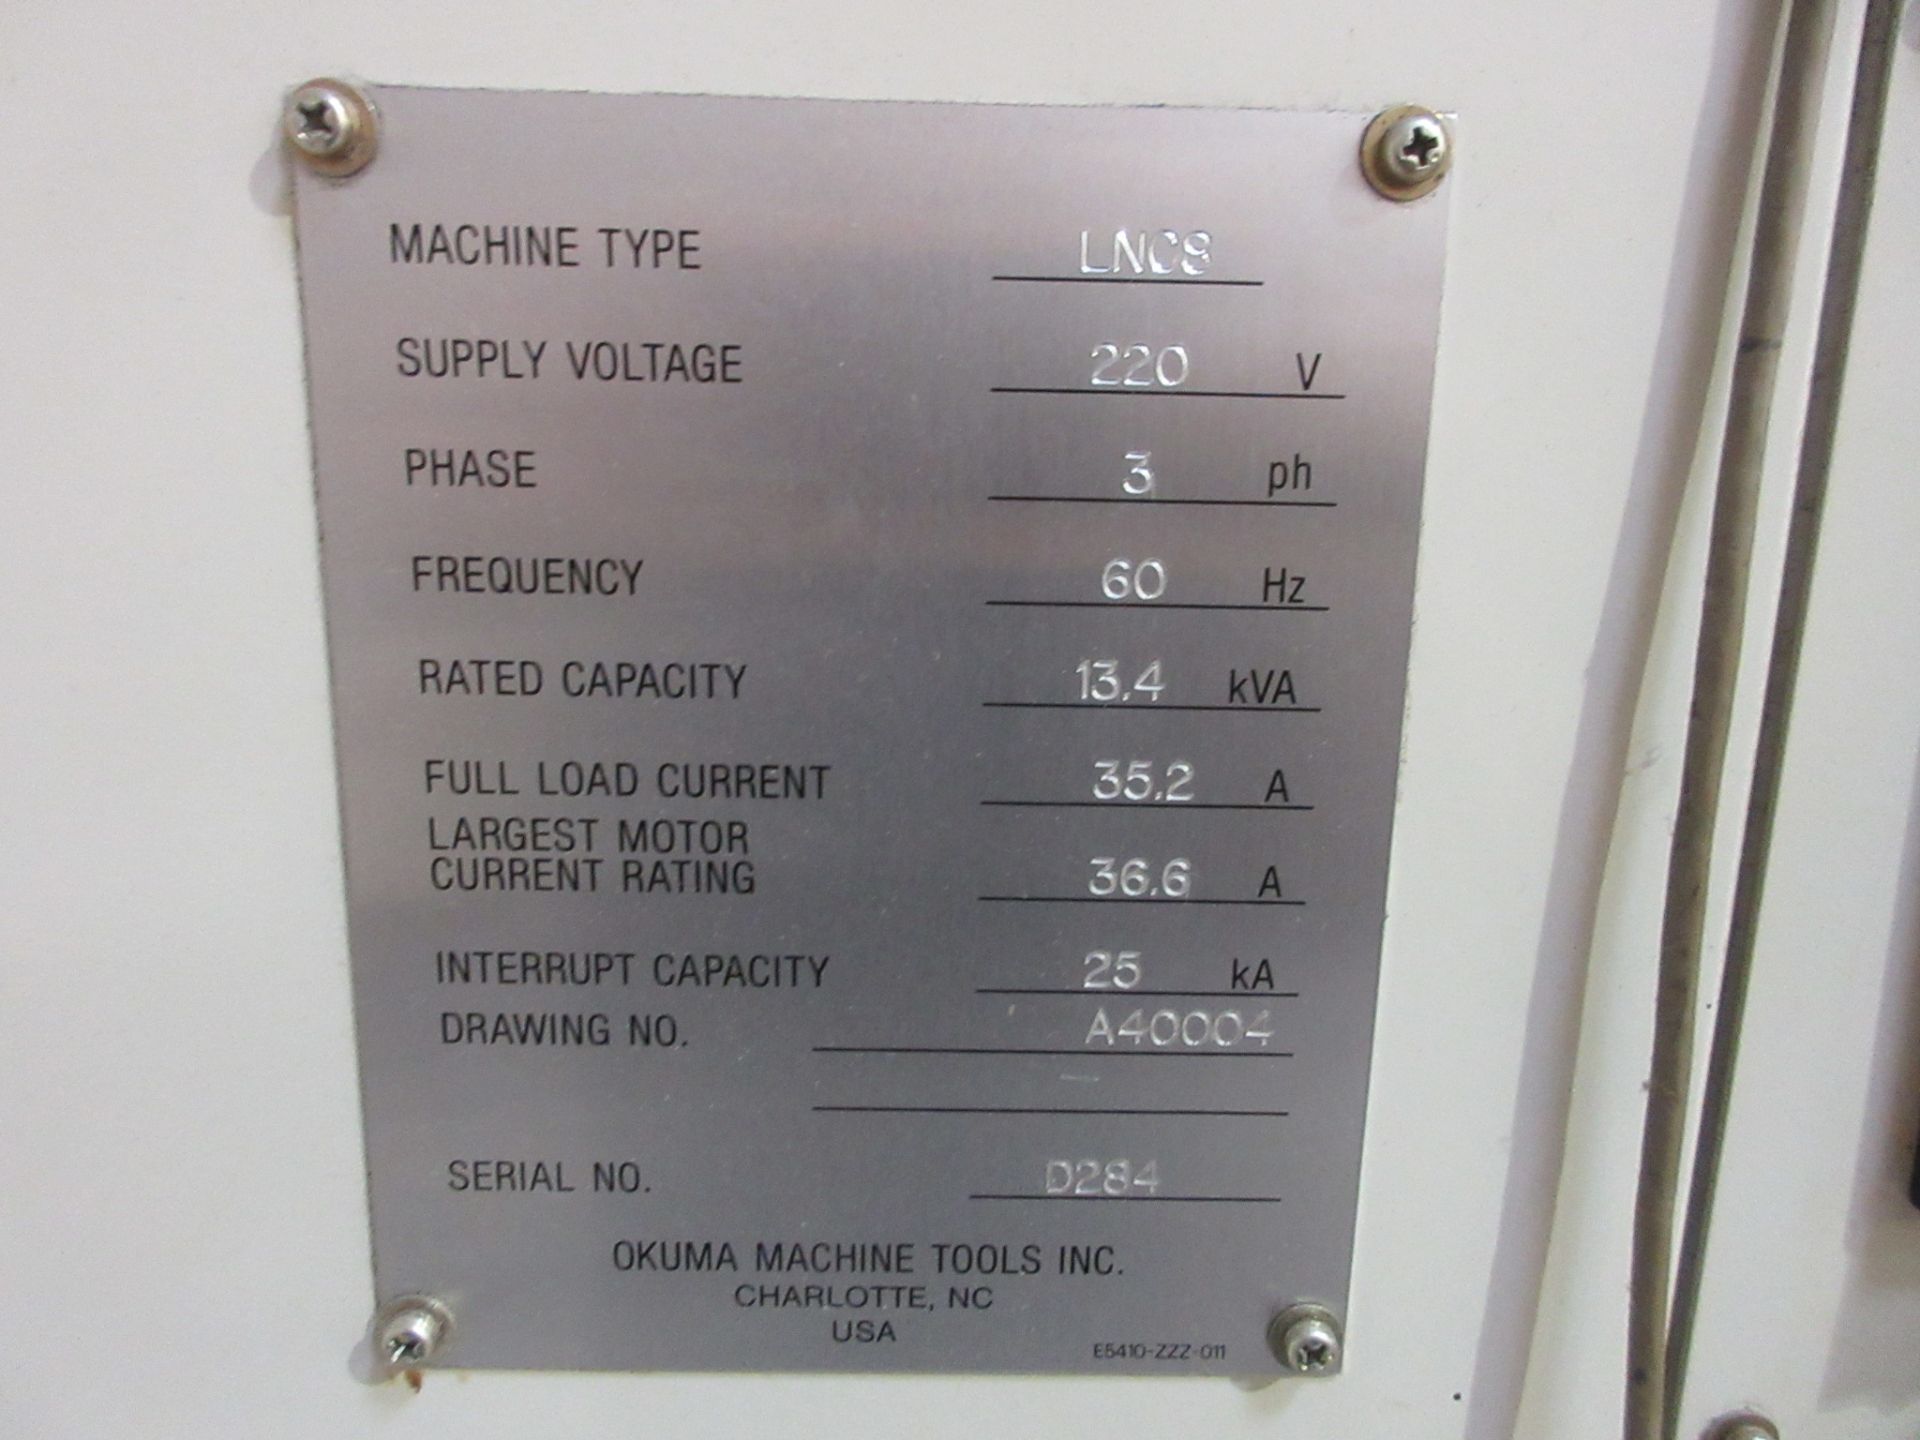 OKUMA CADET LNC8 CNC LATHE, S/N D284, CNC CONTROL, 9” 3-JAW CHUCK, 12-STATION TURRET, TAILSTOCK, - Image 18 of 19